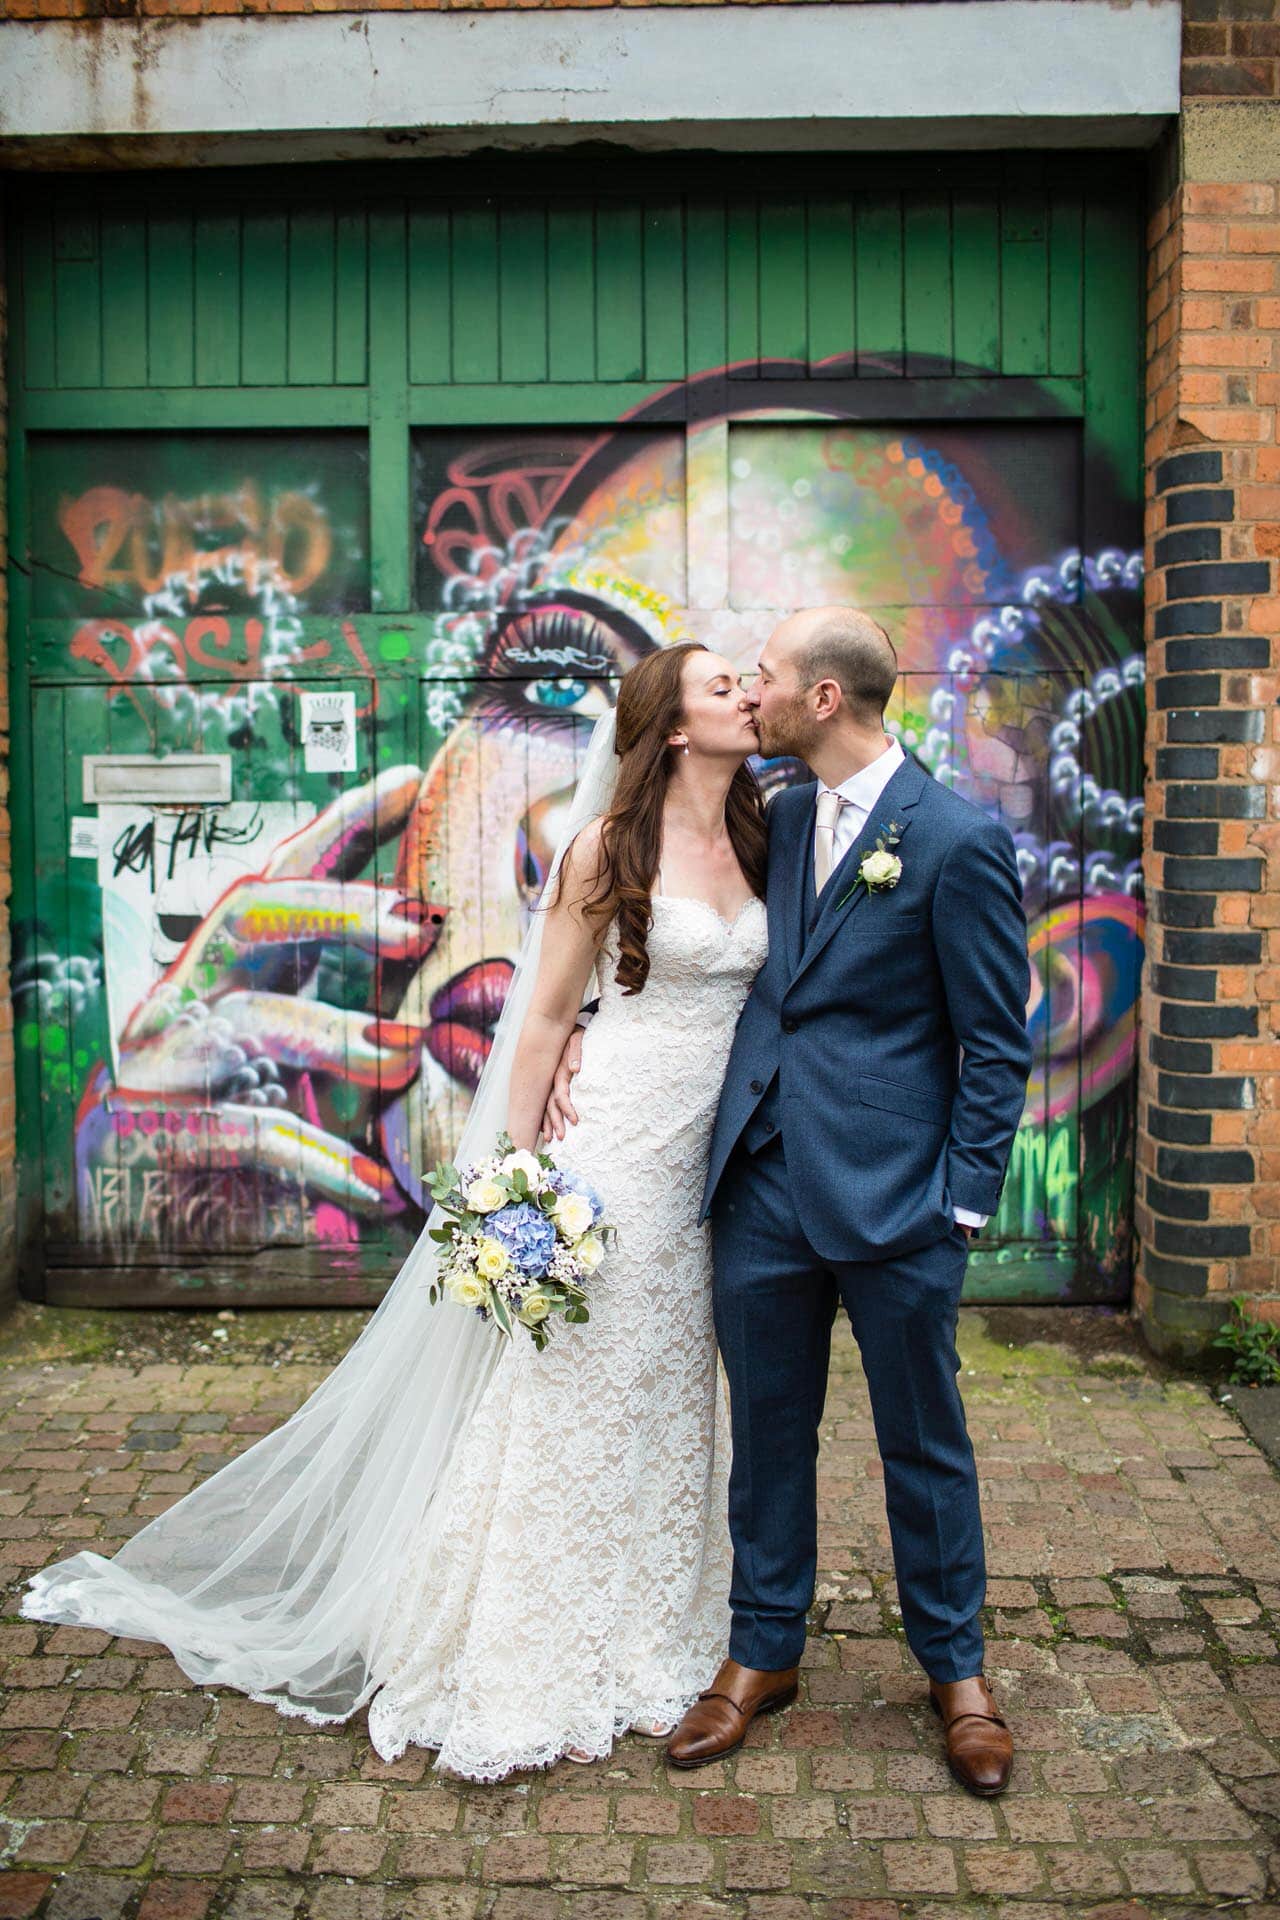 Bride & Groom kissing in front of Graffiti in Digbeth, Birmingham